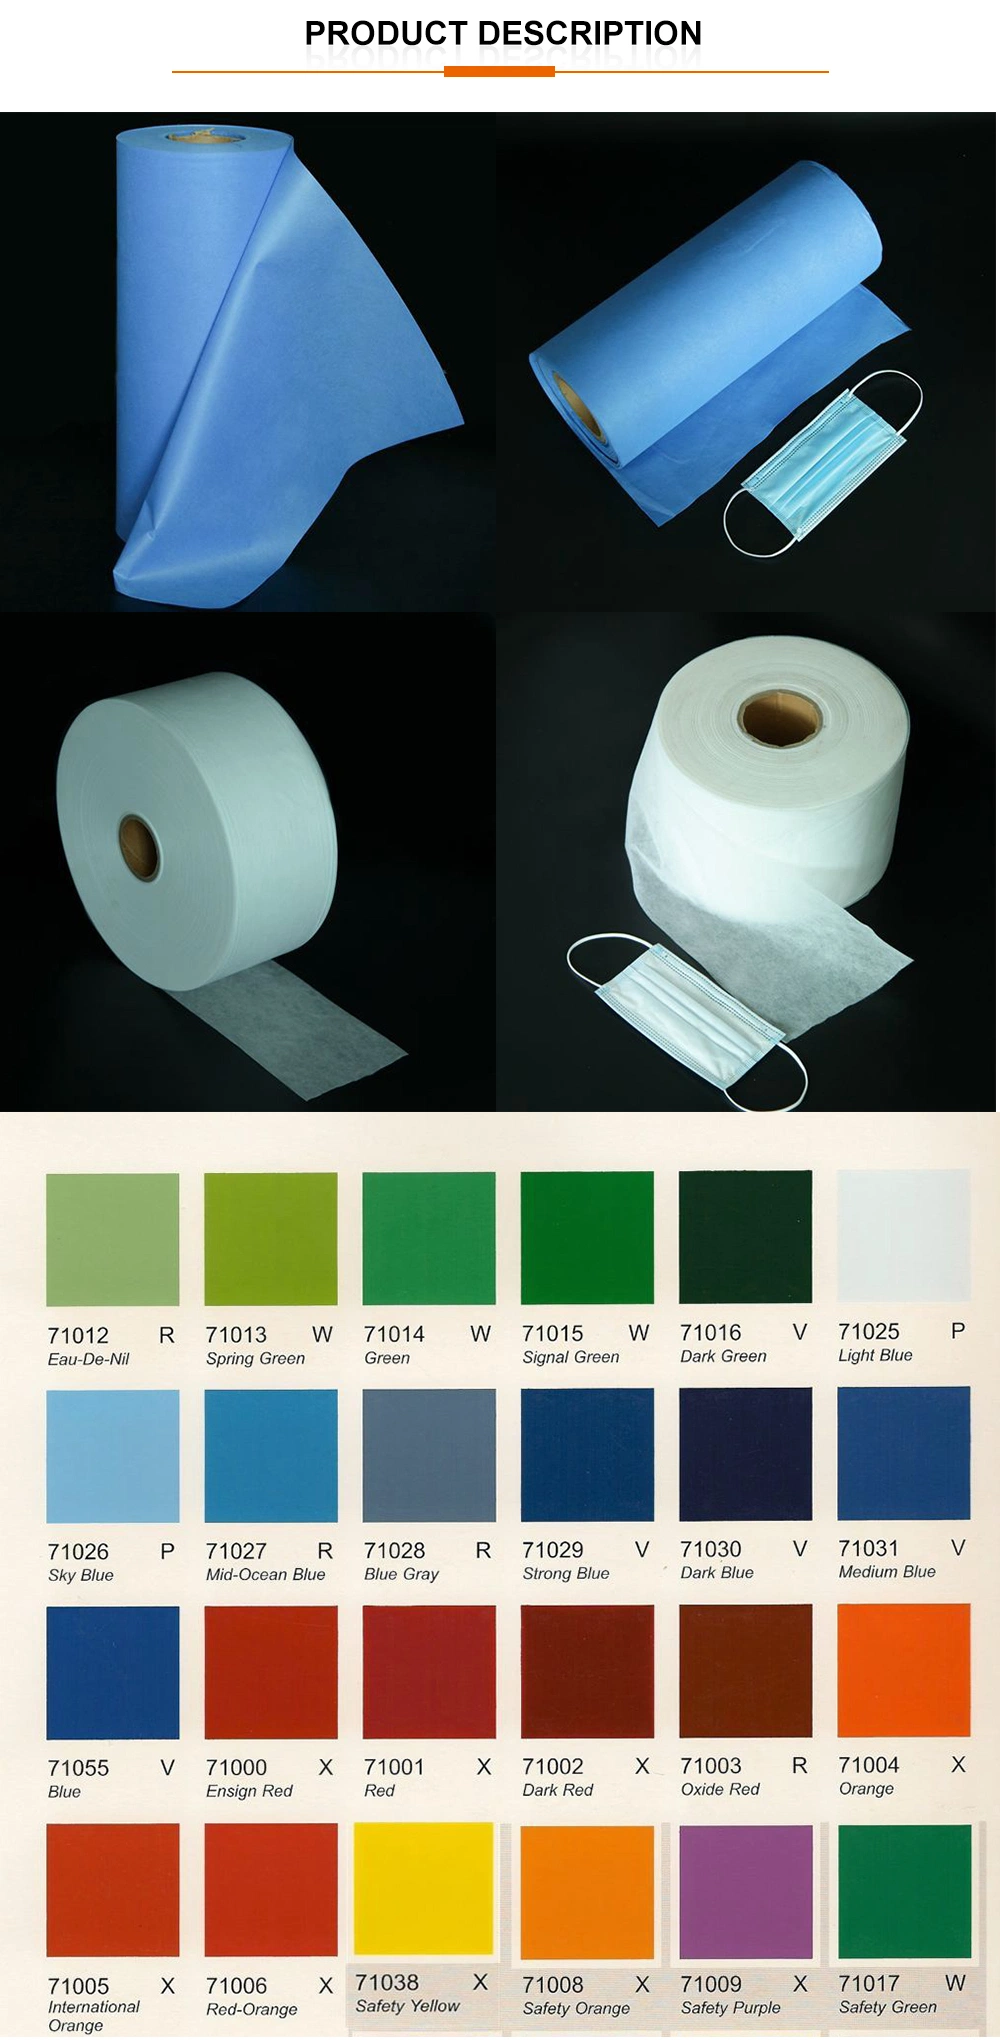 Polypropylene Spunbond Non Woven Fabric Rolls with 100% Polypropylene